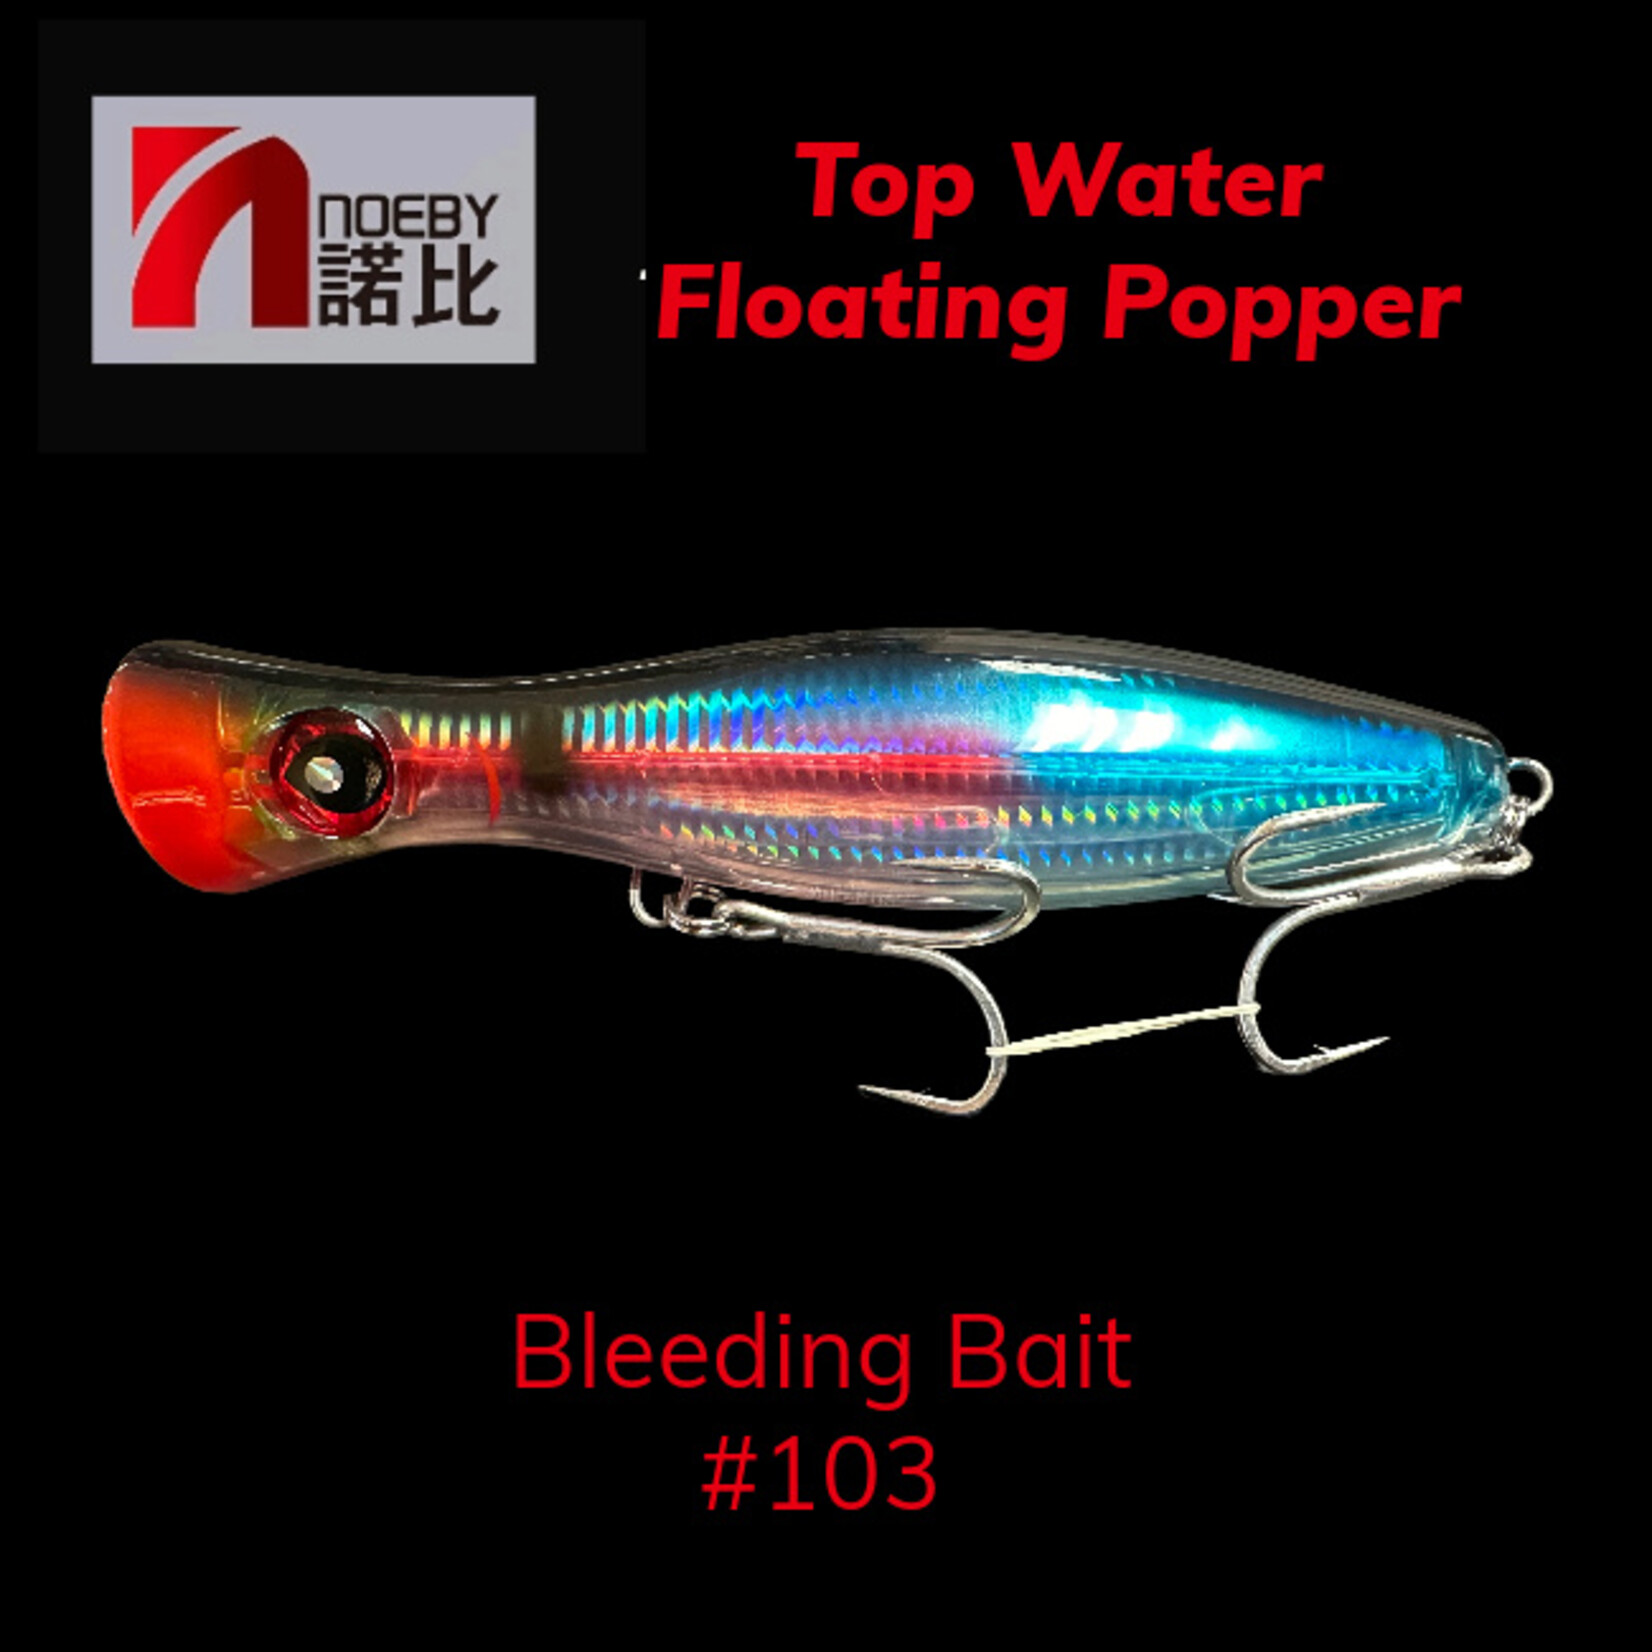 Noeby Top Water Floating Popper